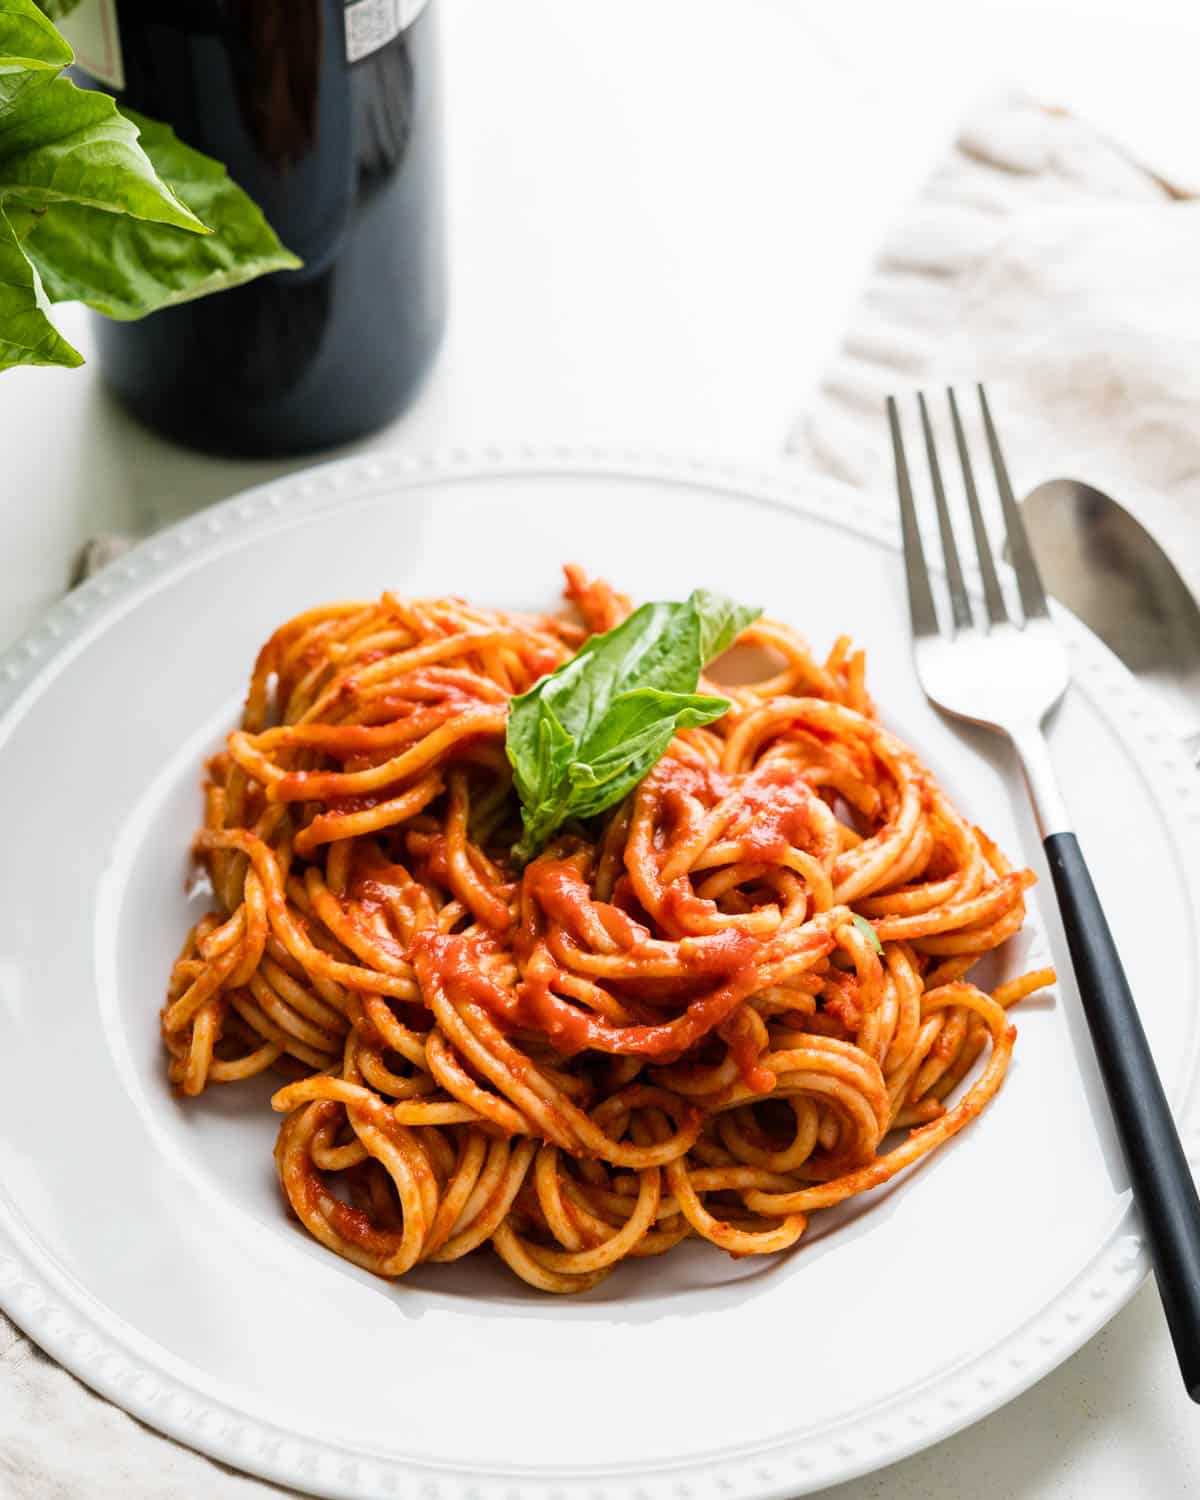 Homemade Pomodoro sauce over spaghetti noodles.